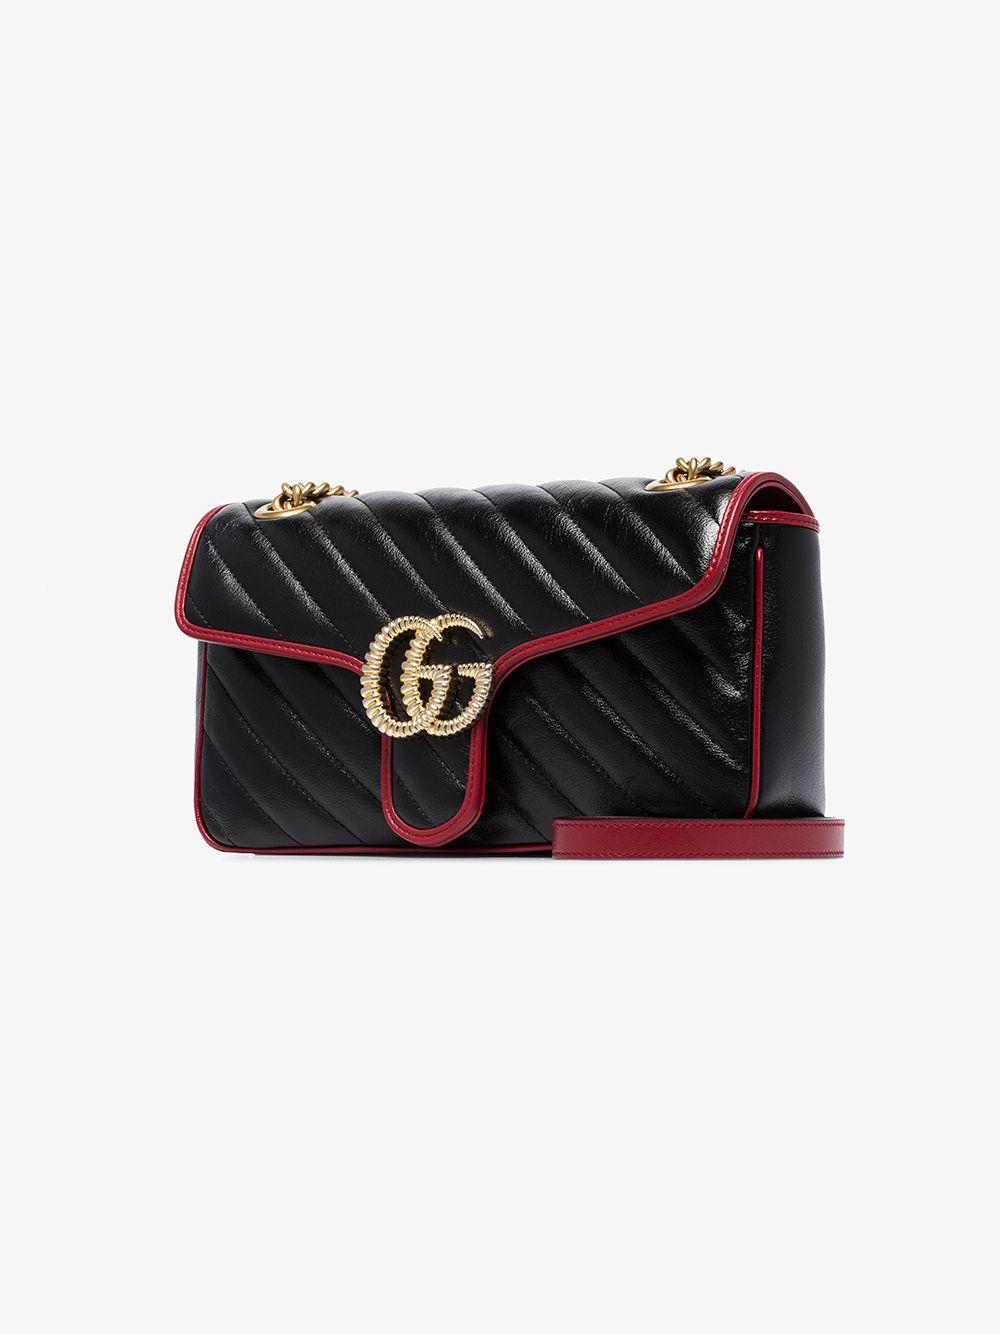 Gucci New Black Marmont Medium Bag - Vintage Lux